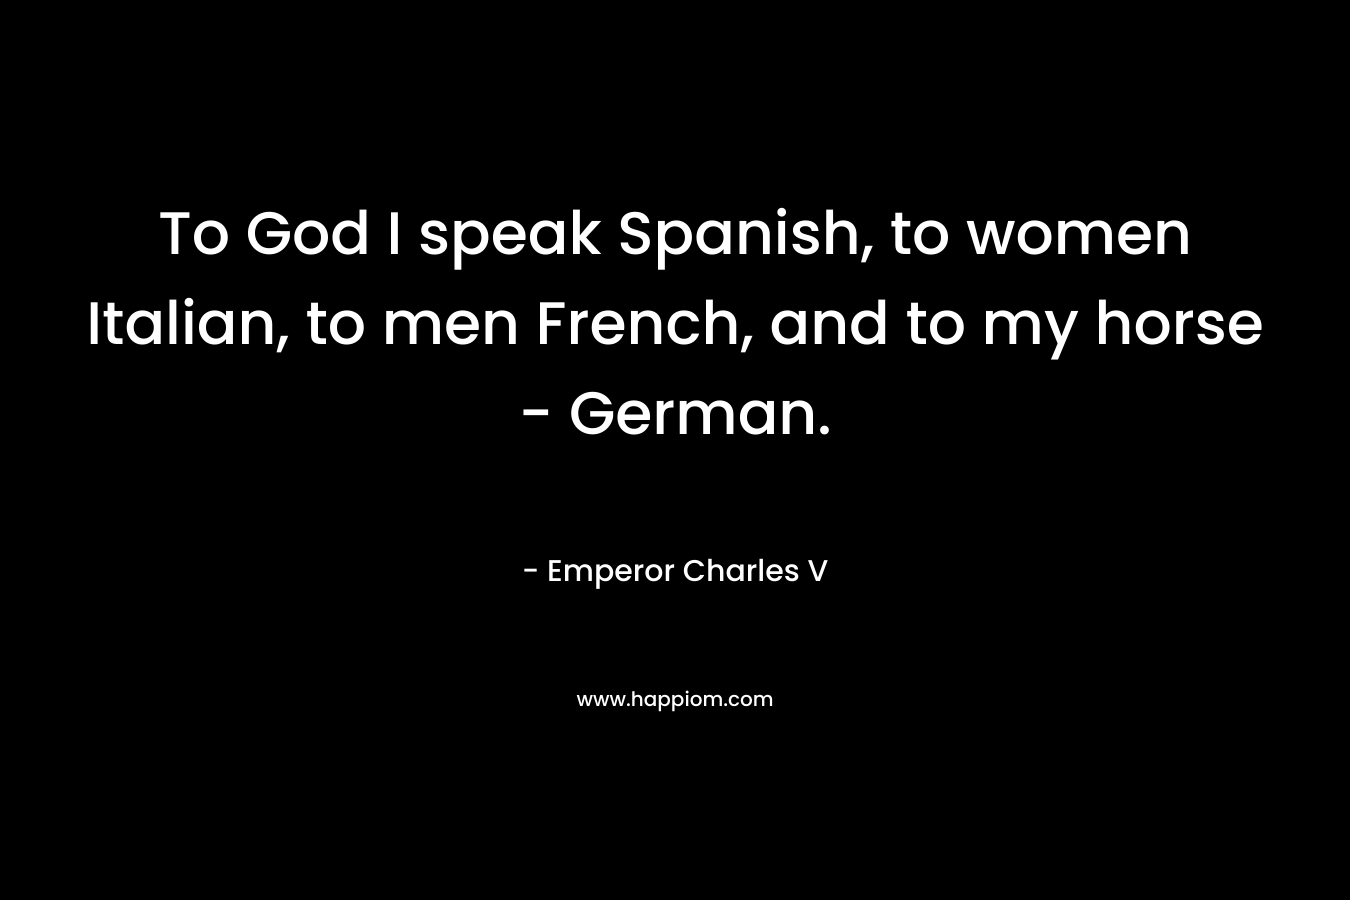 To God I speak Spanish, to women Italian, to men French, and to my horse - German.